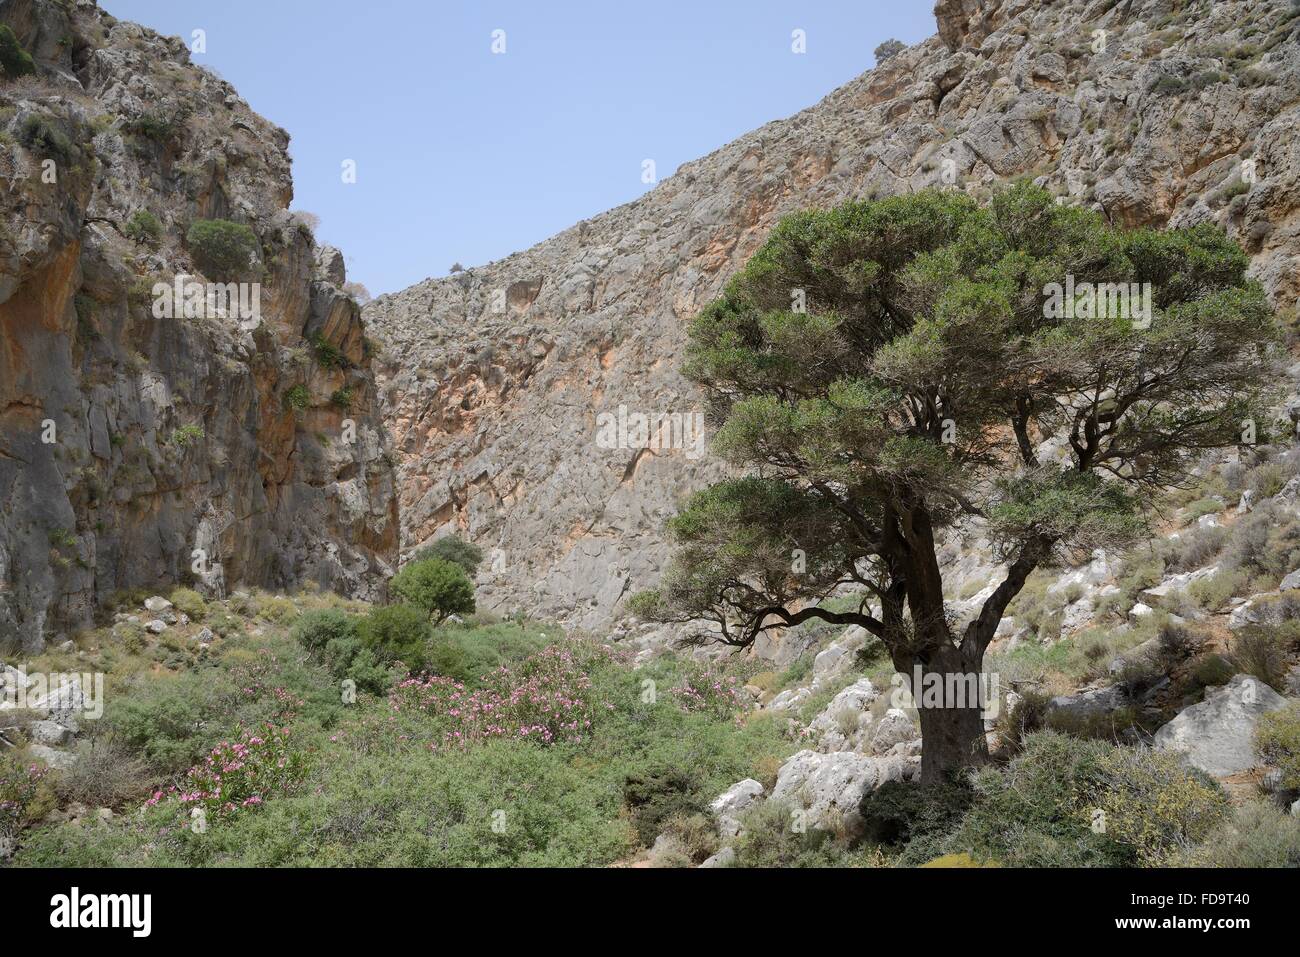 Ancient Olive tree  (Olea europaea) and flowering Oleander bushes (Nereum oleander) in Hohlakies / Chochlakies gorge, Crete. Stock Photo